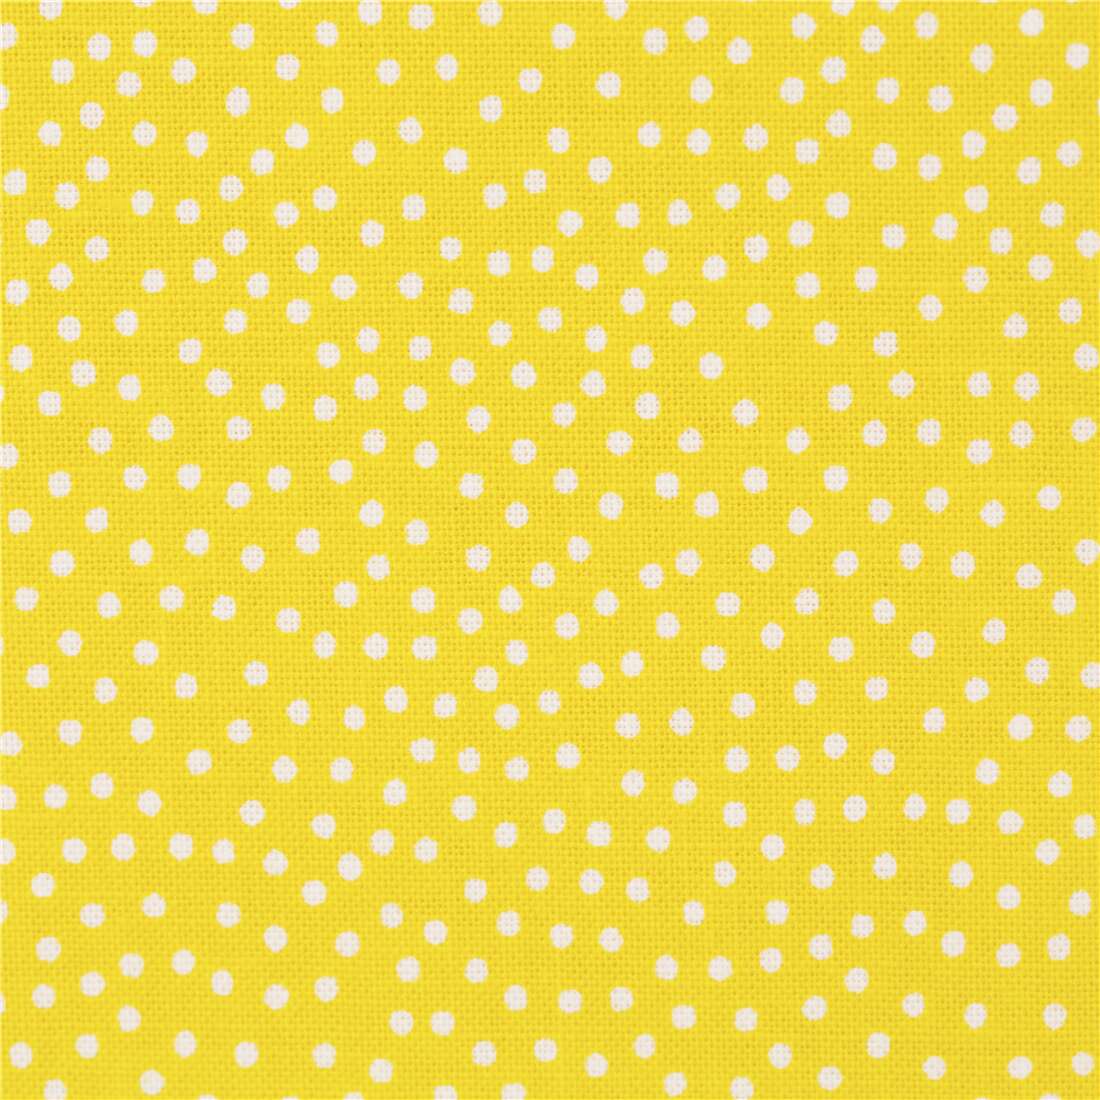 lemon yellow background garden pindot white polka dots on cotton fabric -  modeS4u